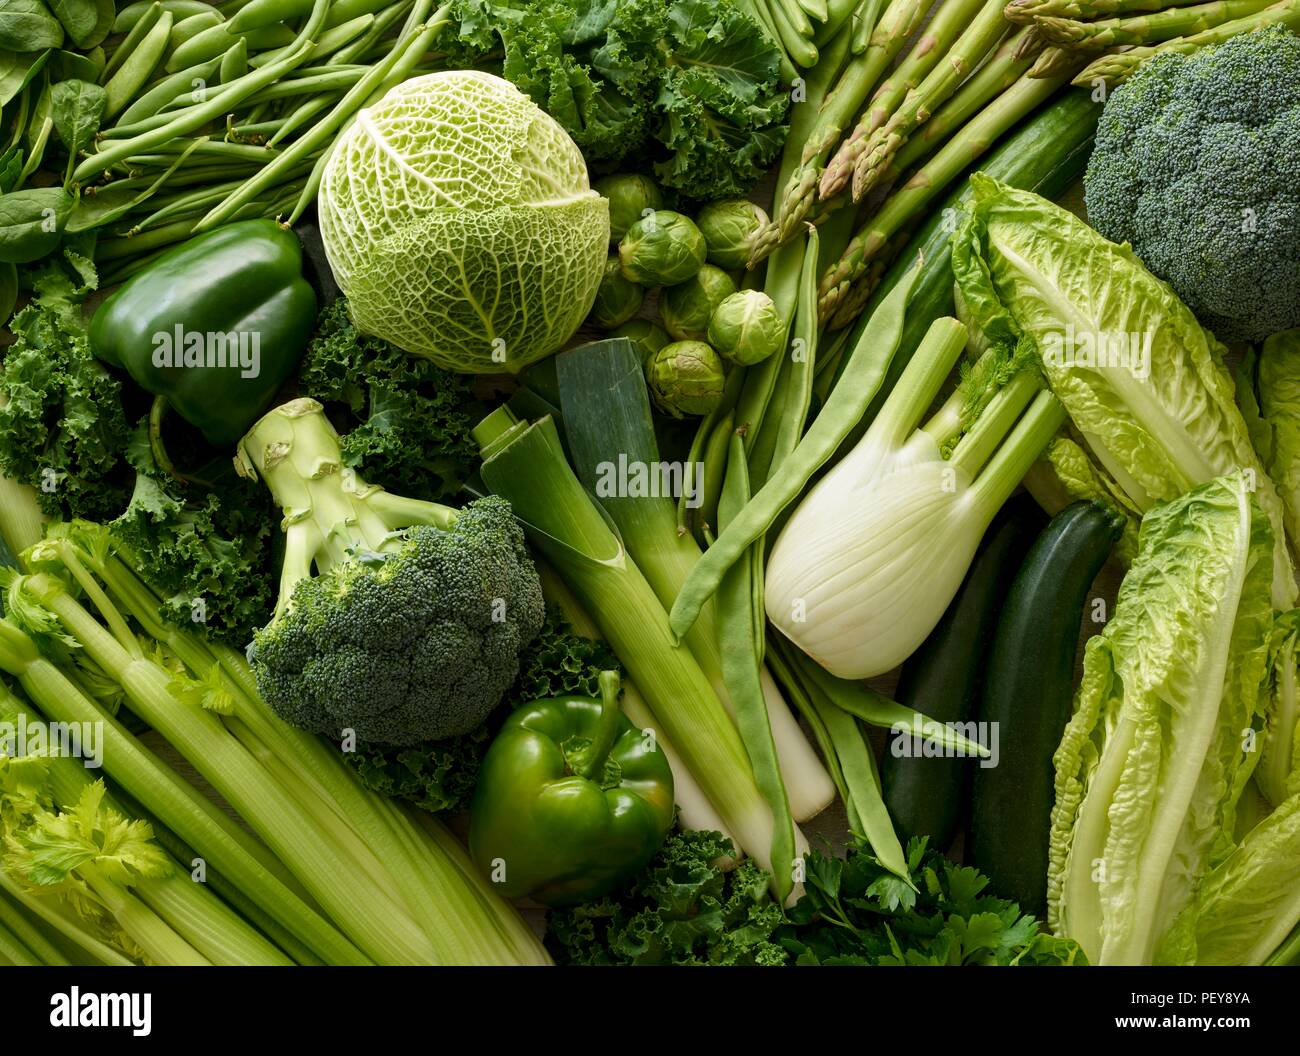 Variety of fresh green vegetables. Stock Photo